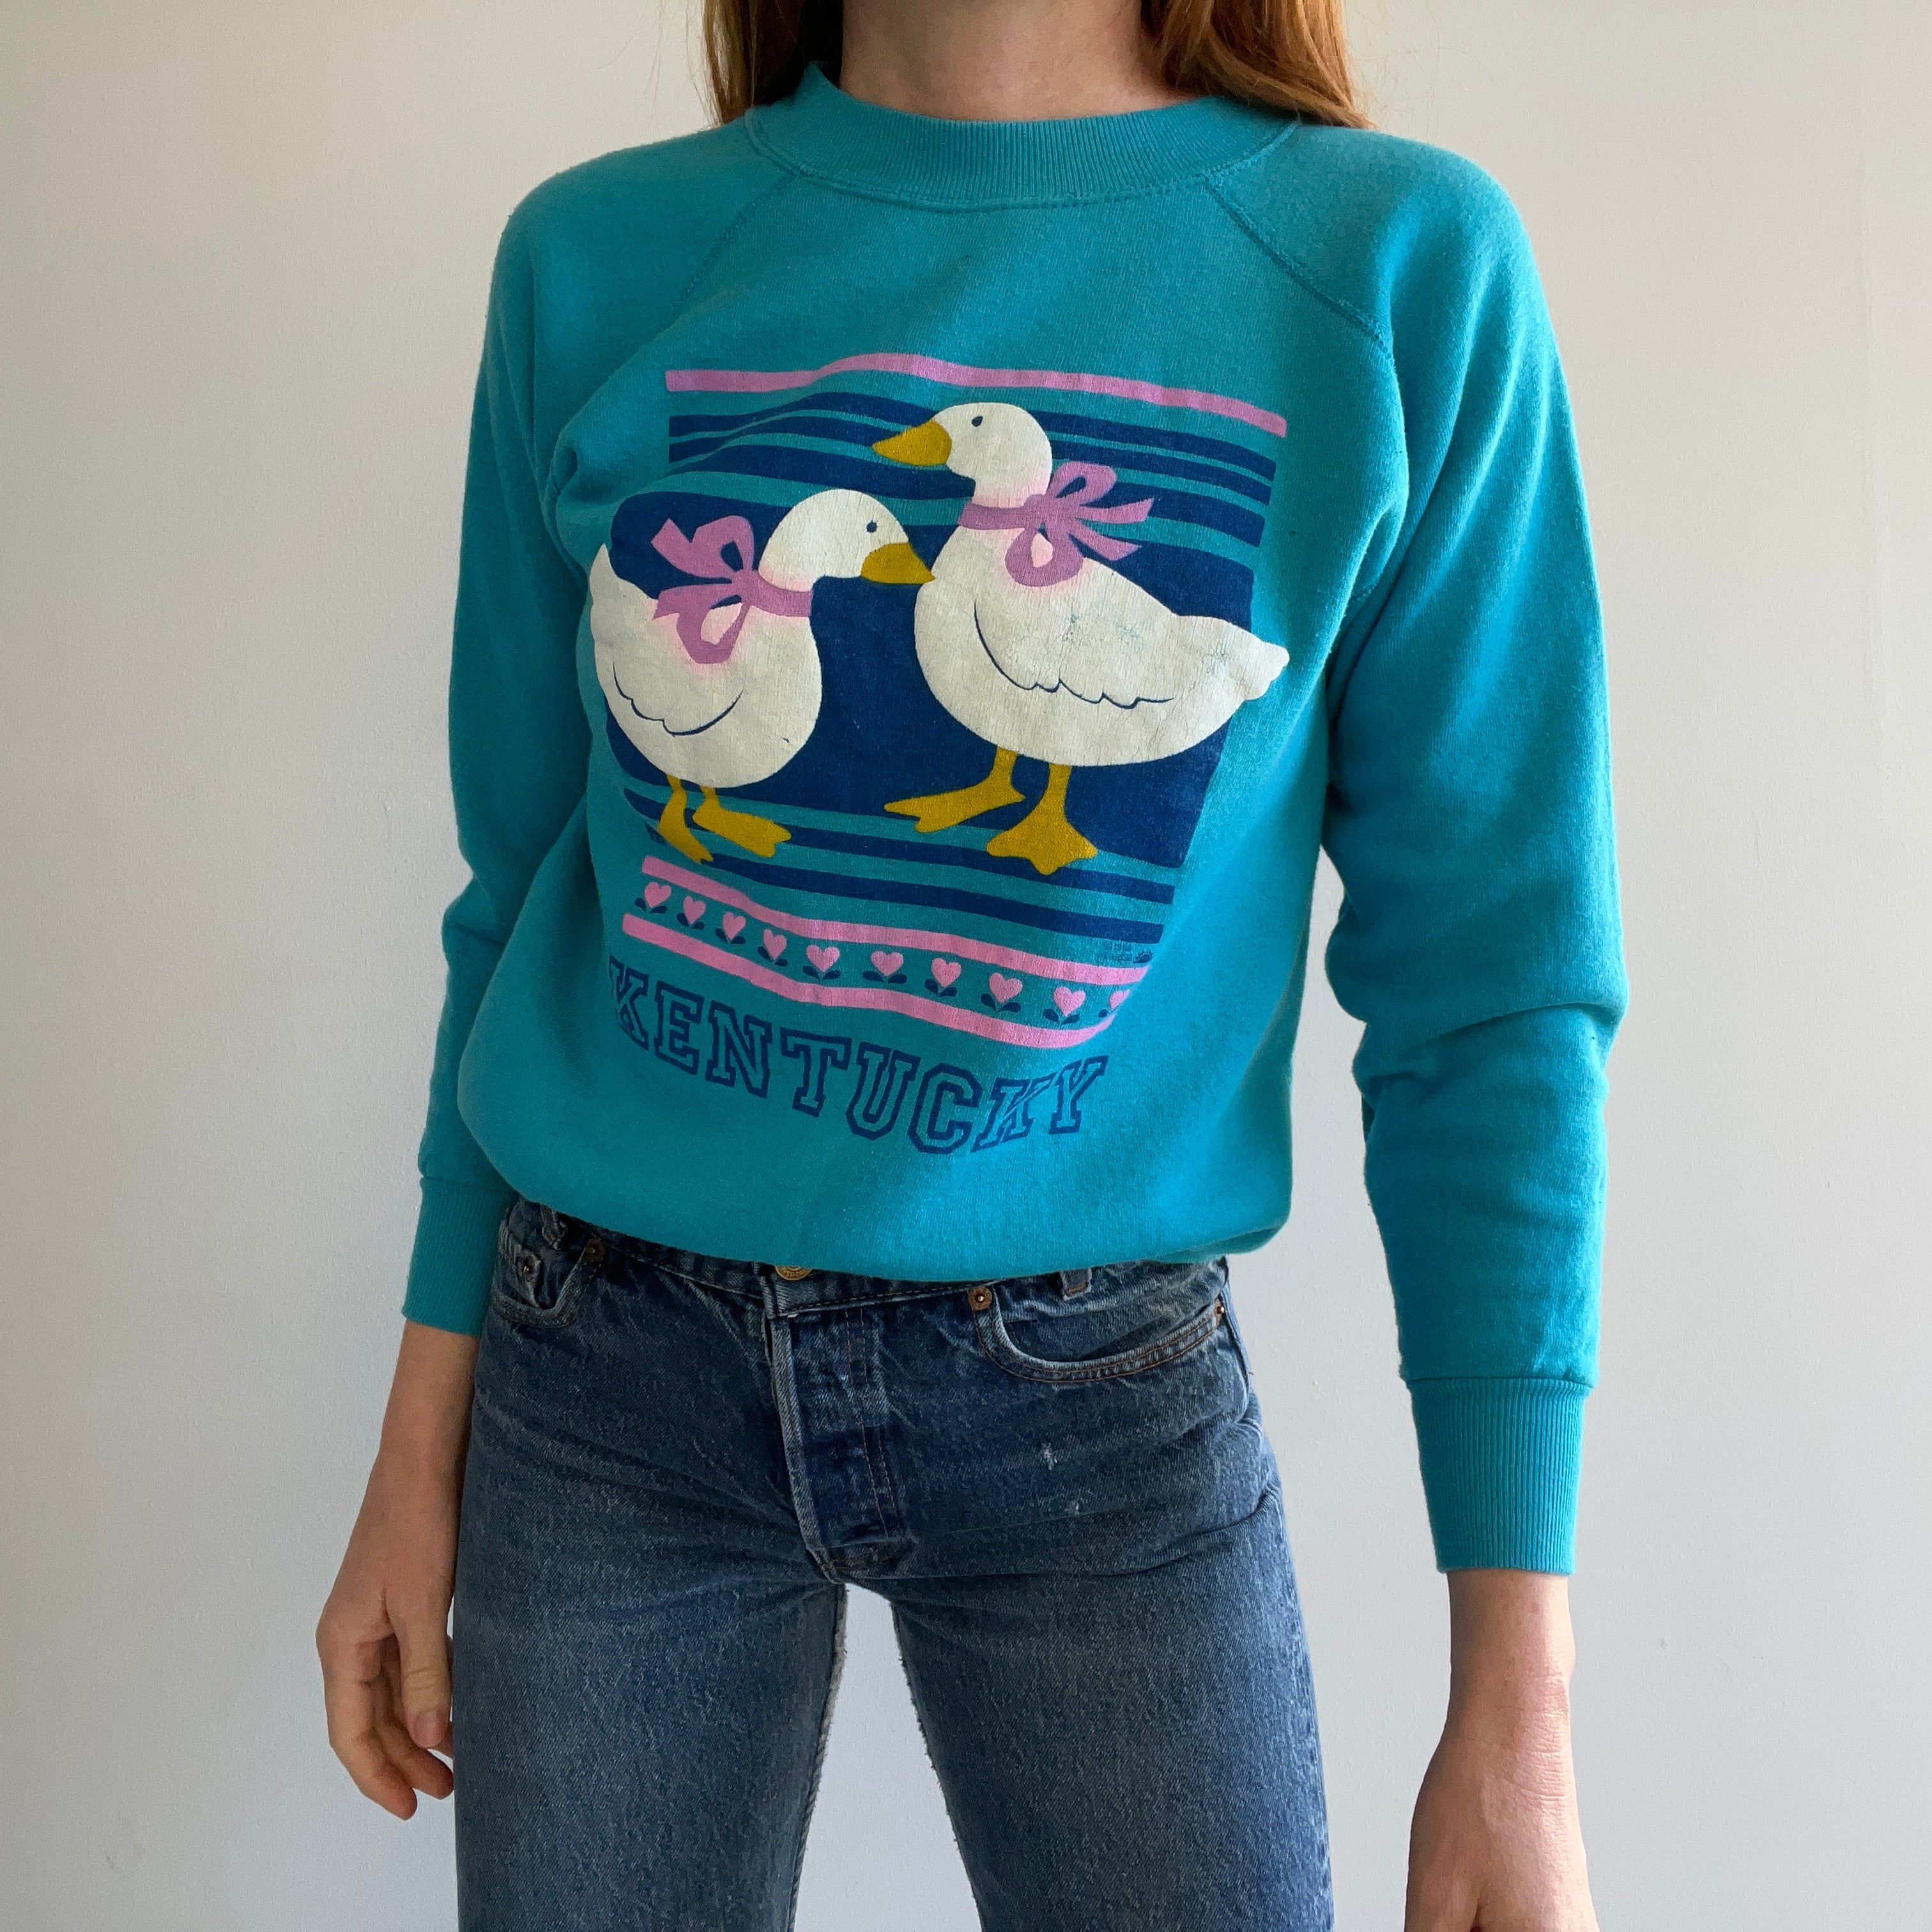 1989 Ducks in Bows Kentucky Tourist Sweatshirt